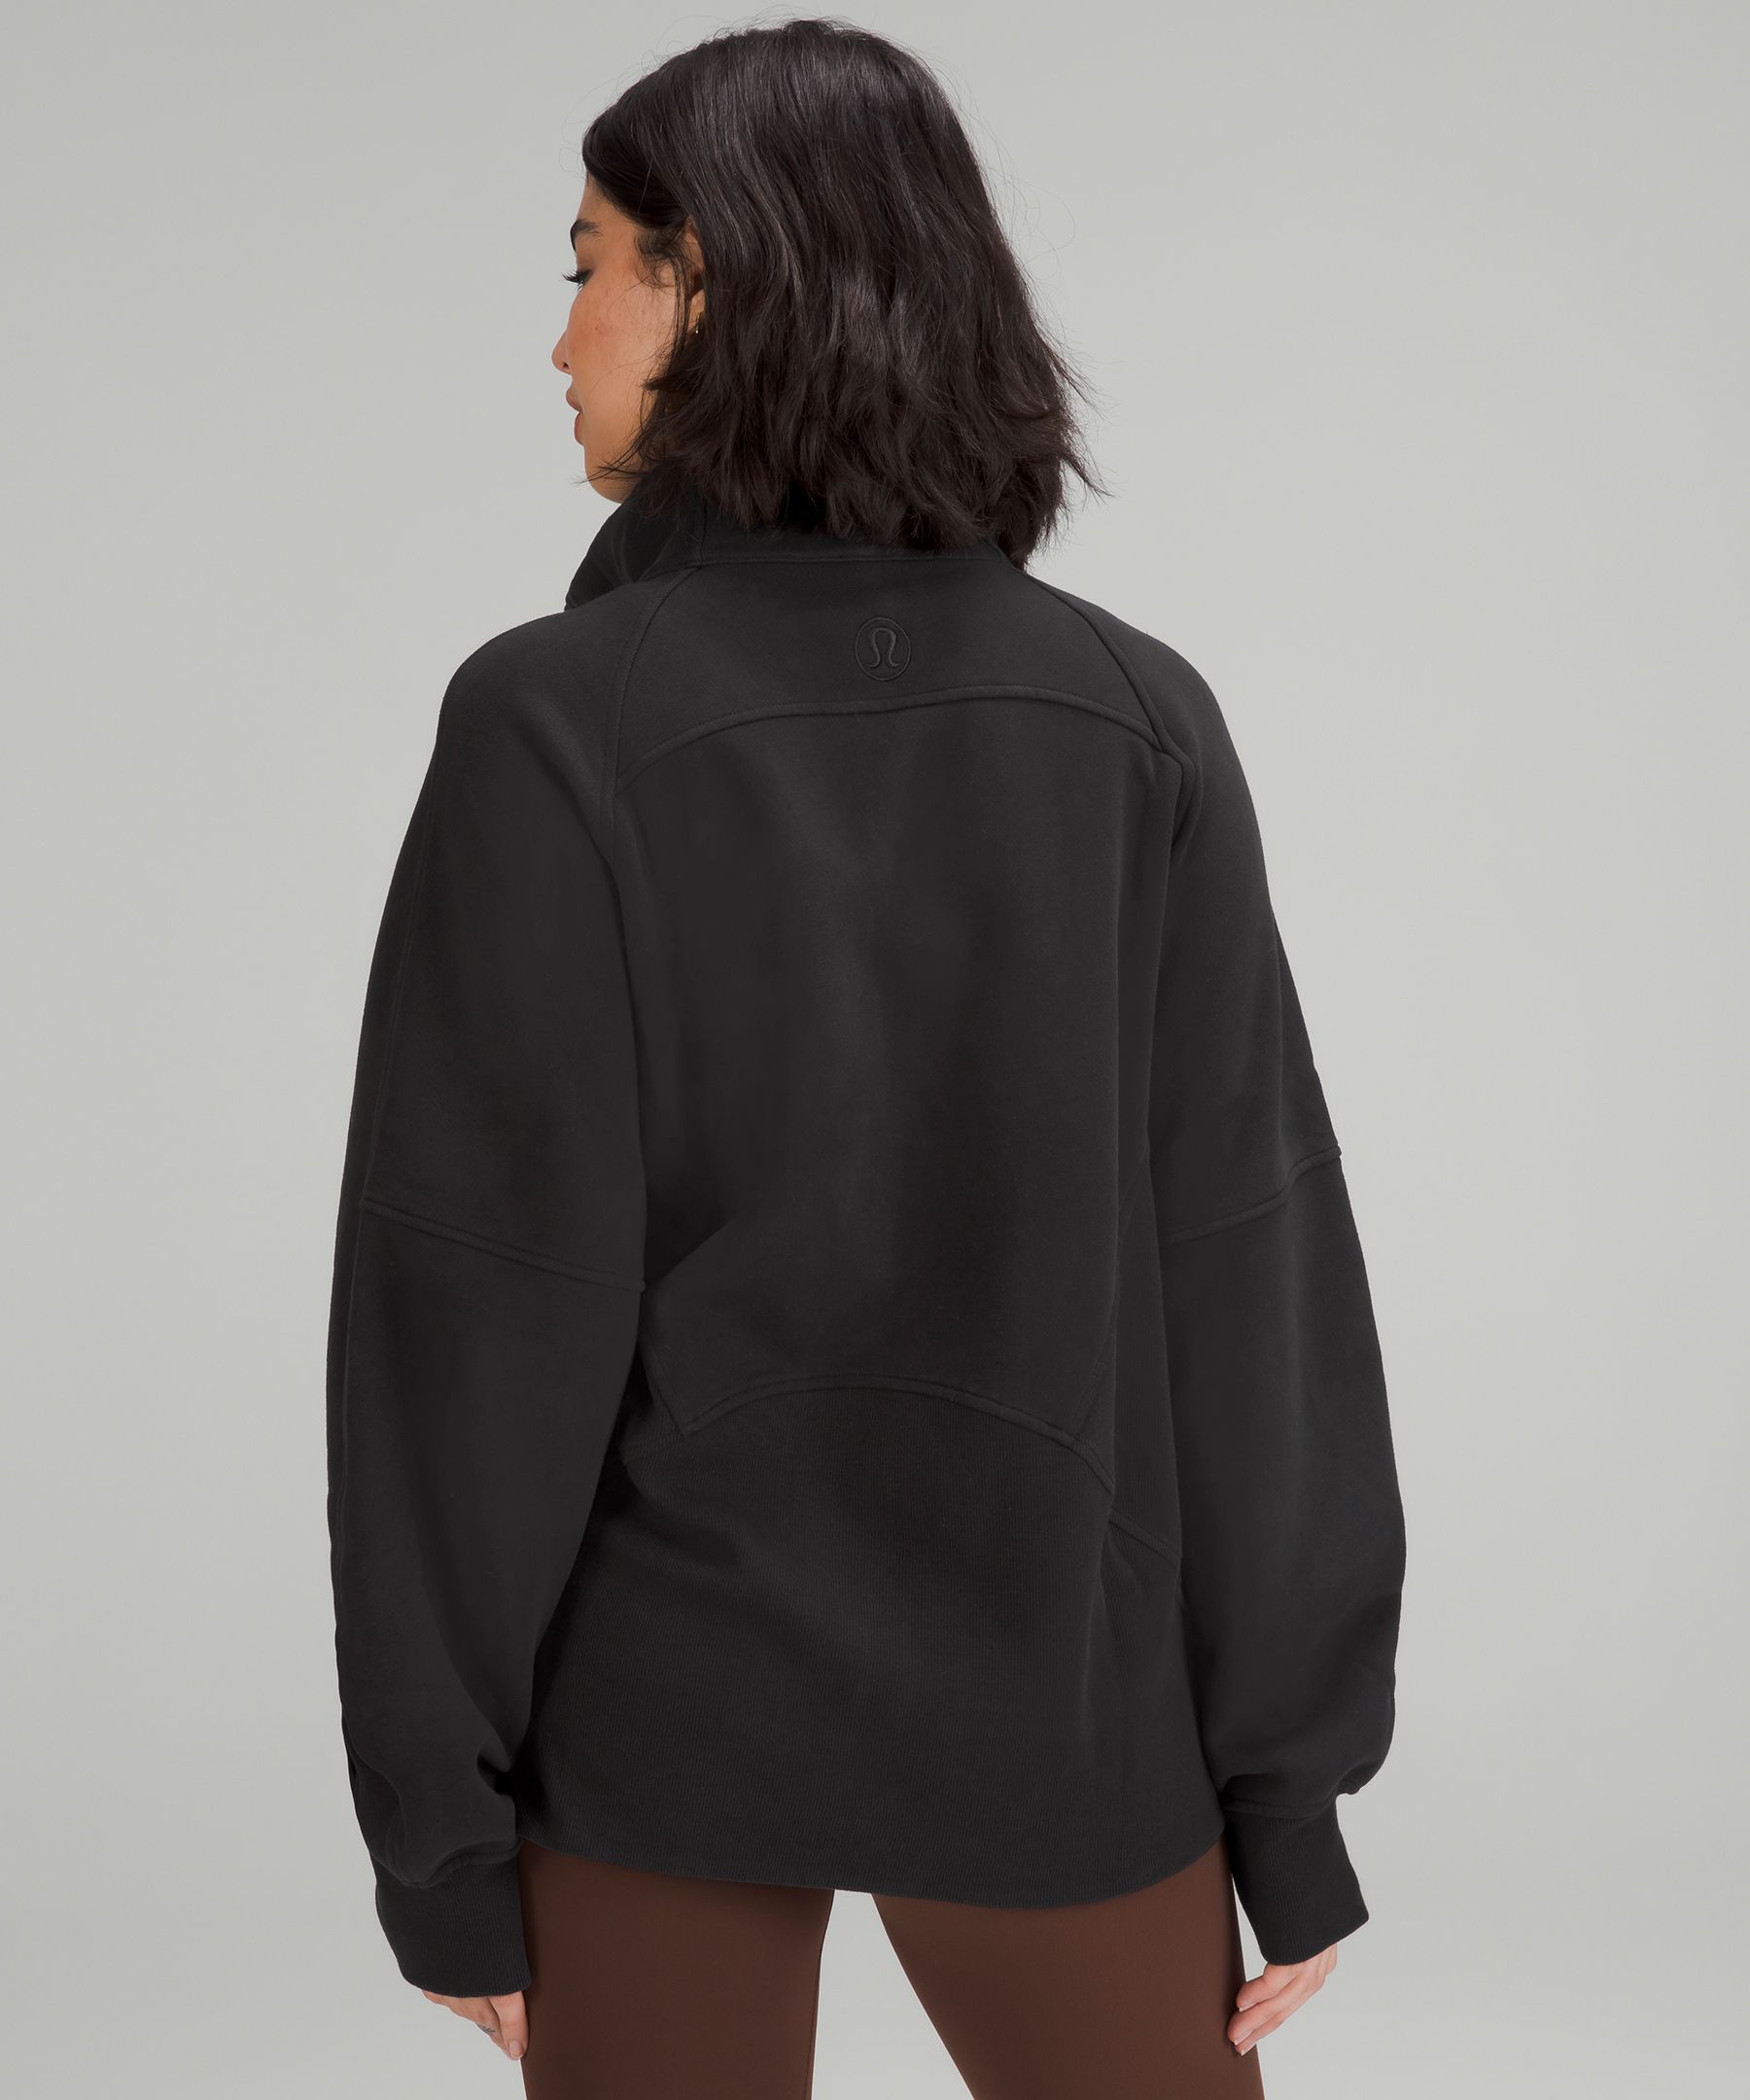 Lululemon Black Scuba Oversized Funnel Neck Half Zip Sweatshirt Size M/L  Size M - $78 (33% Off Retail) - From M